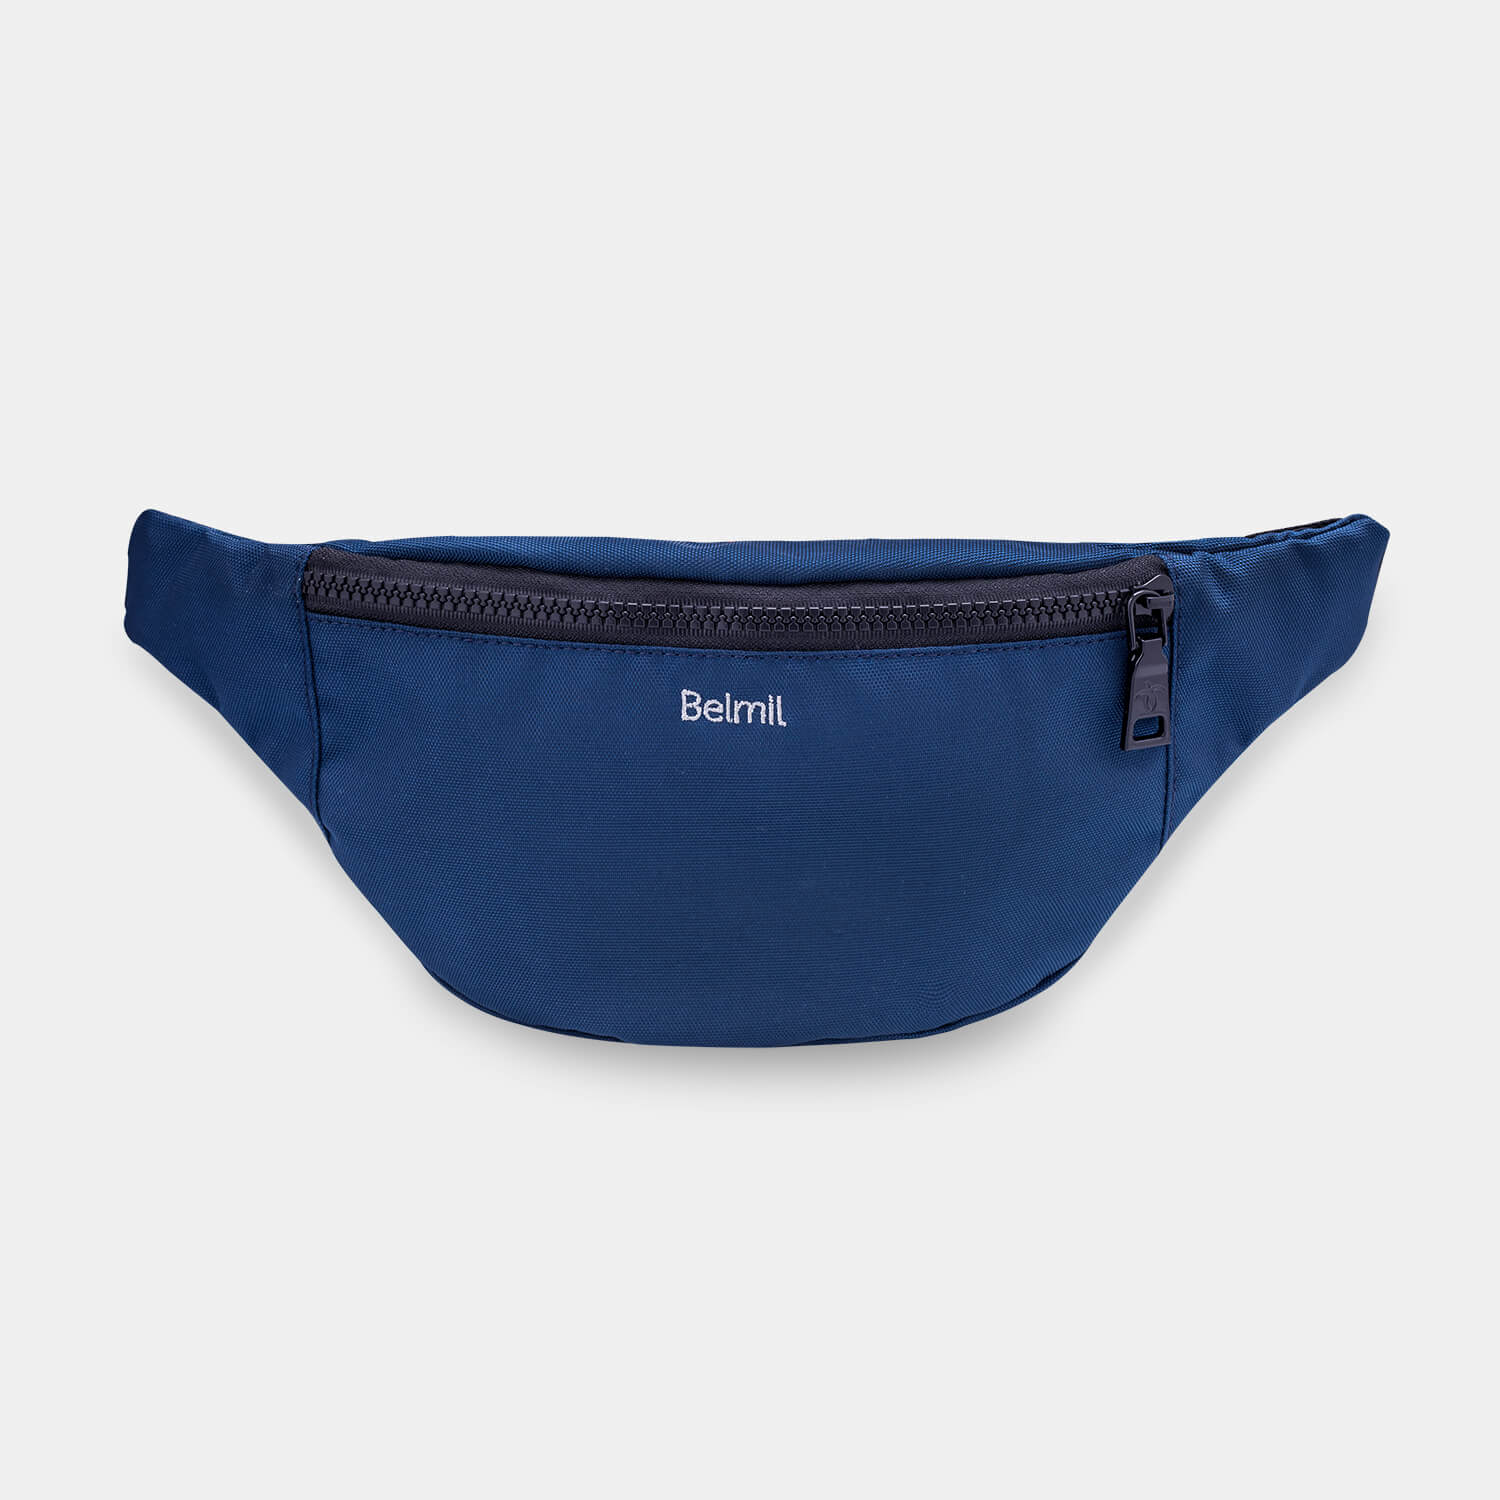 Backpack & Fanny Pack Navy Blue Schoolbag 2pcs.